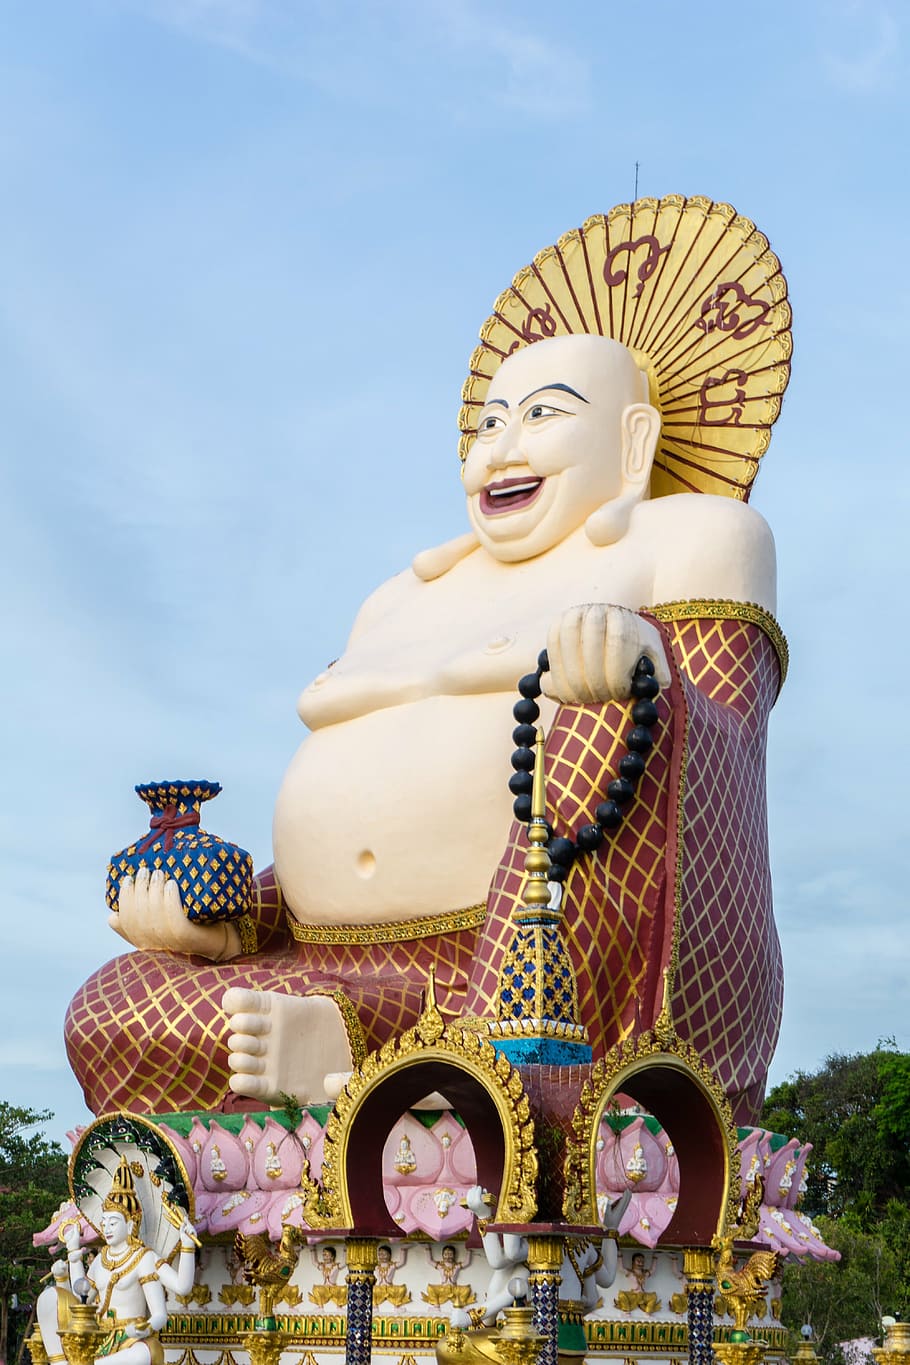 thailand, koh samui, koh phangan, budda, statue, asia, cultures, religion, sculpture, buddhism